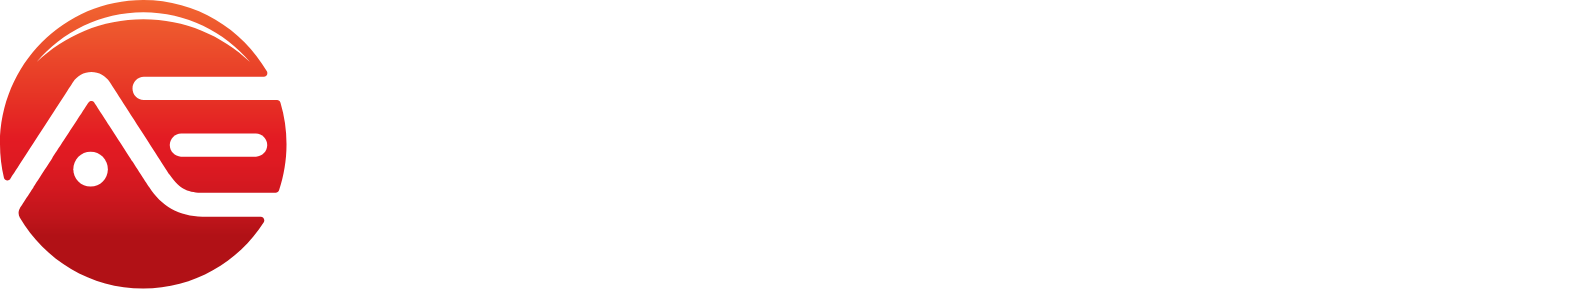 Alliance Entertainment logo large for dark backgrounds (transparent PNG)